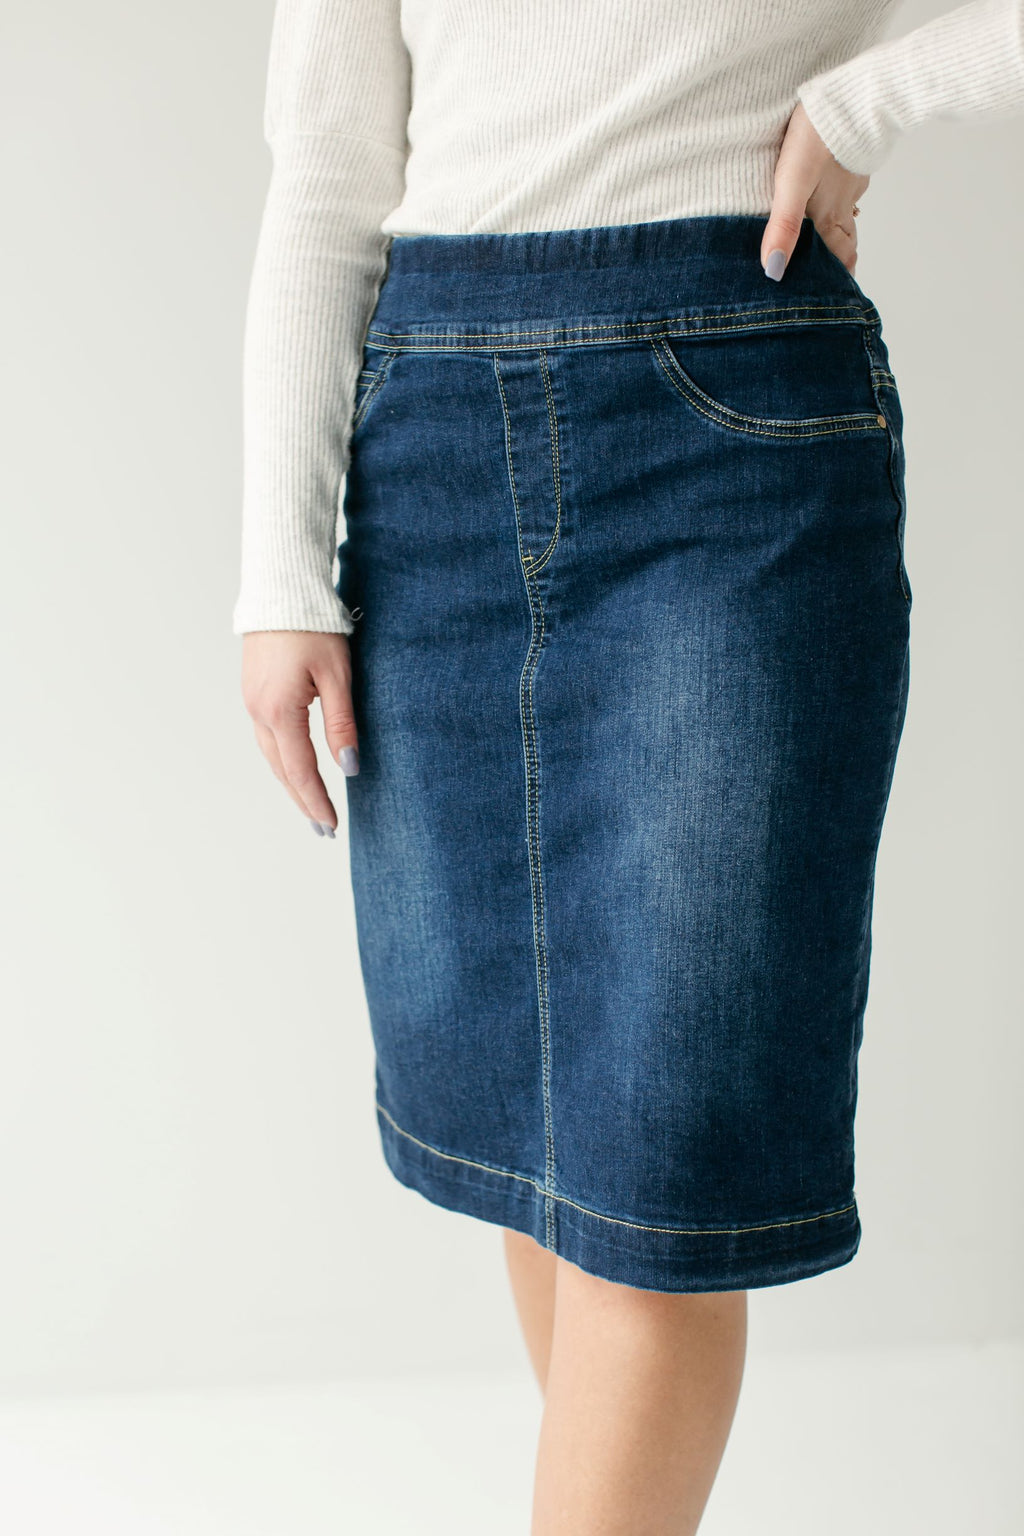 'Sara' Classic Knee Length Dark Denim Skirt – The Main Street Exchange